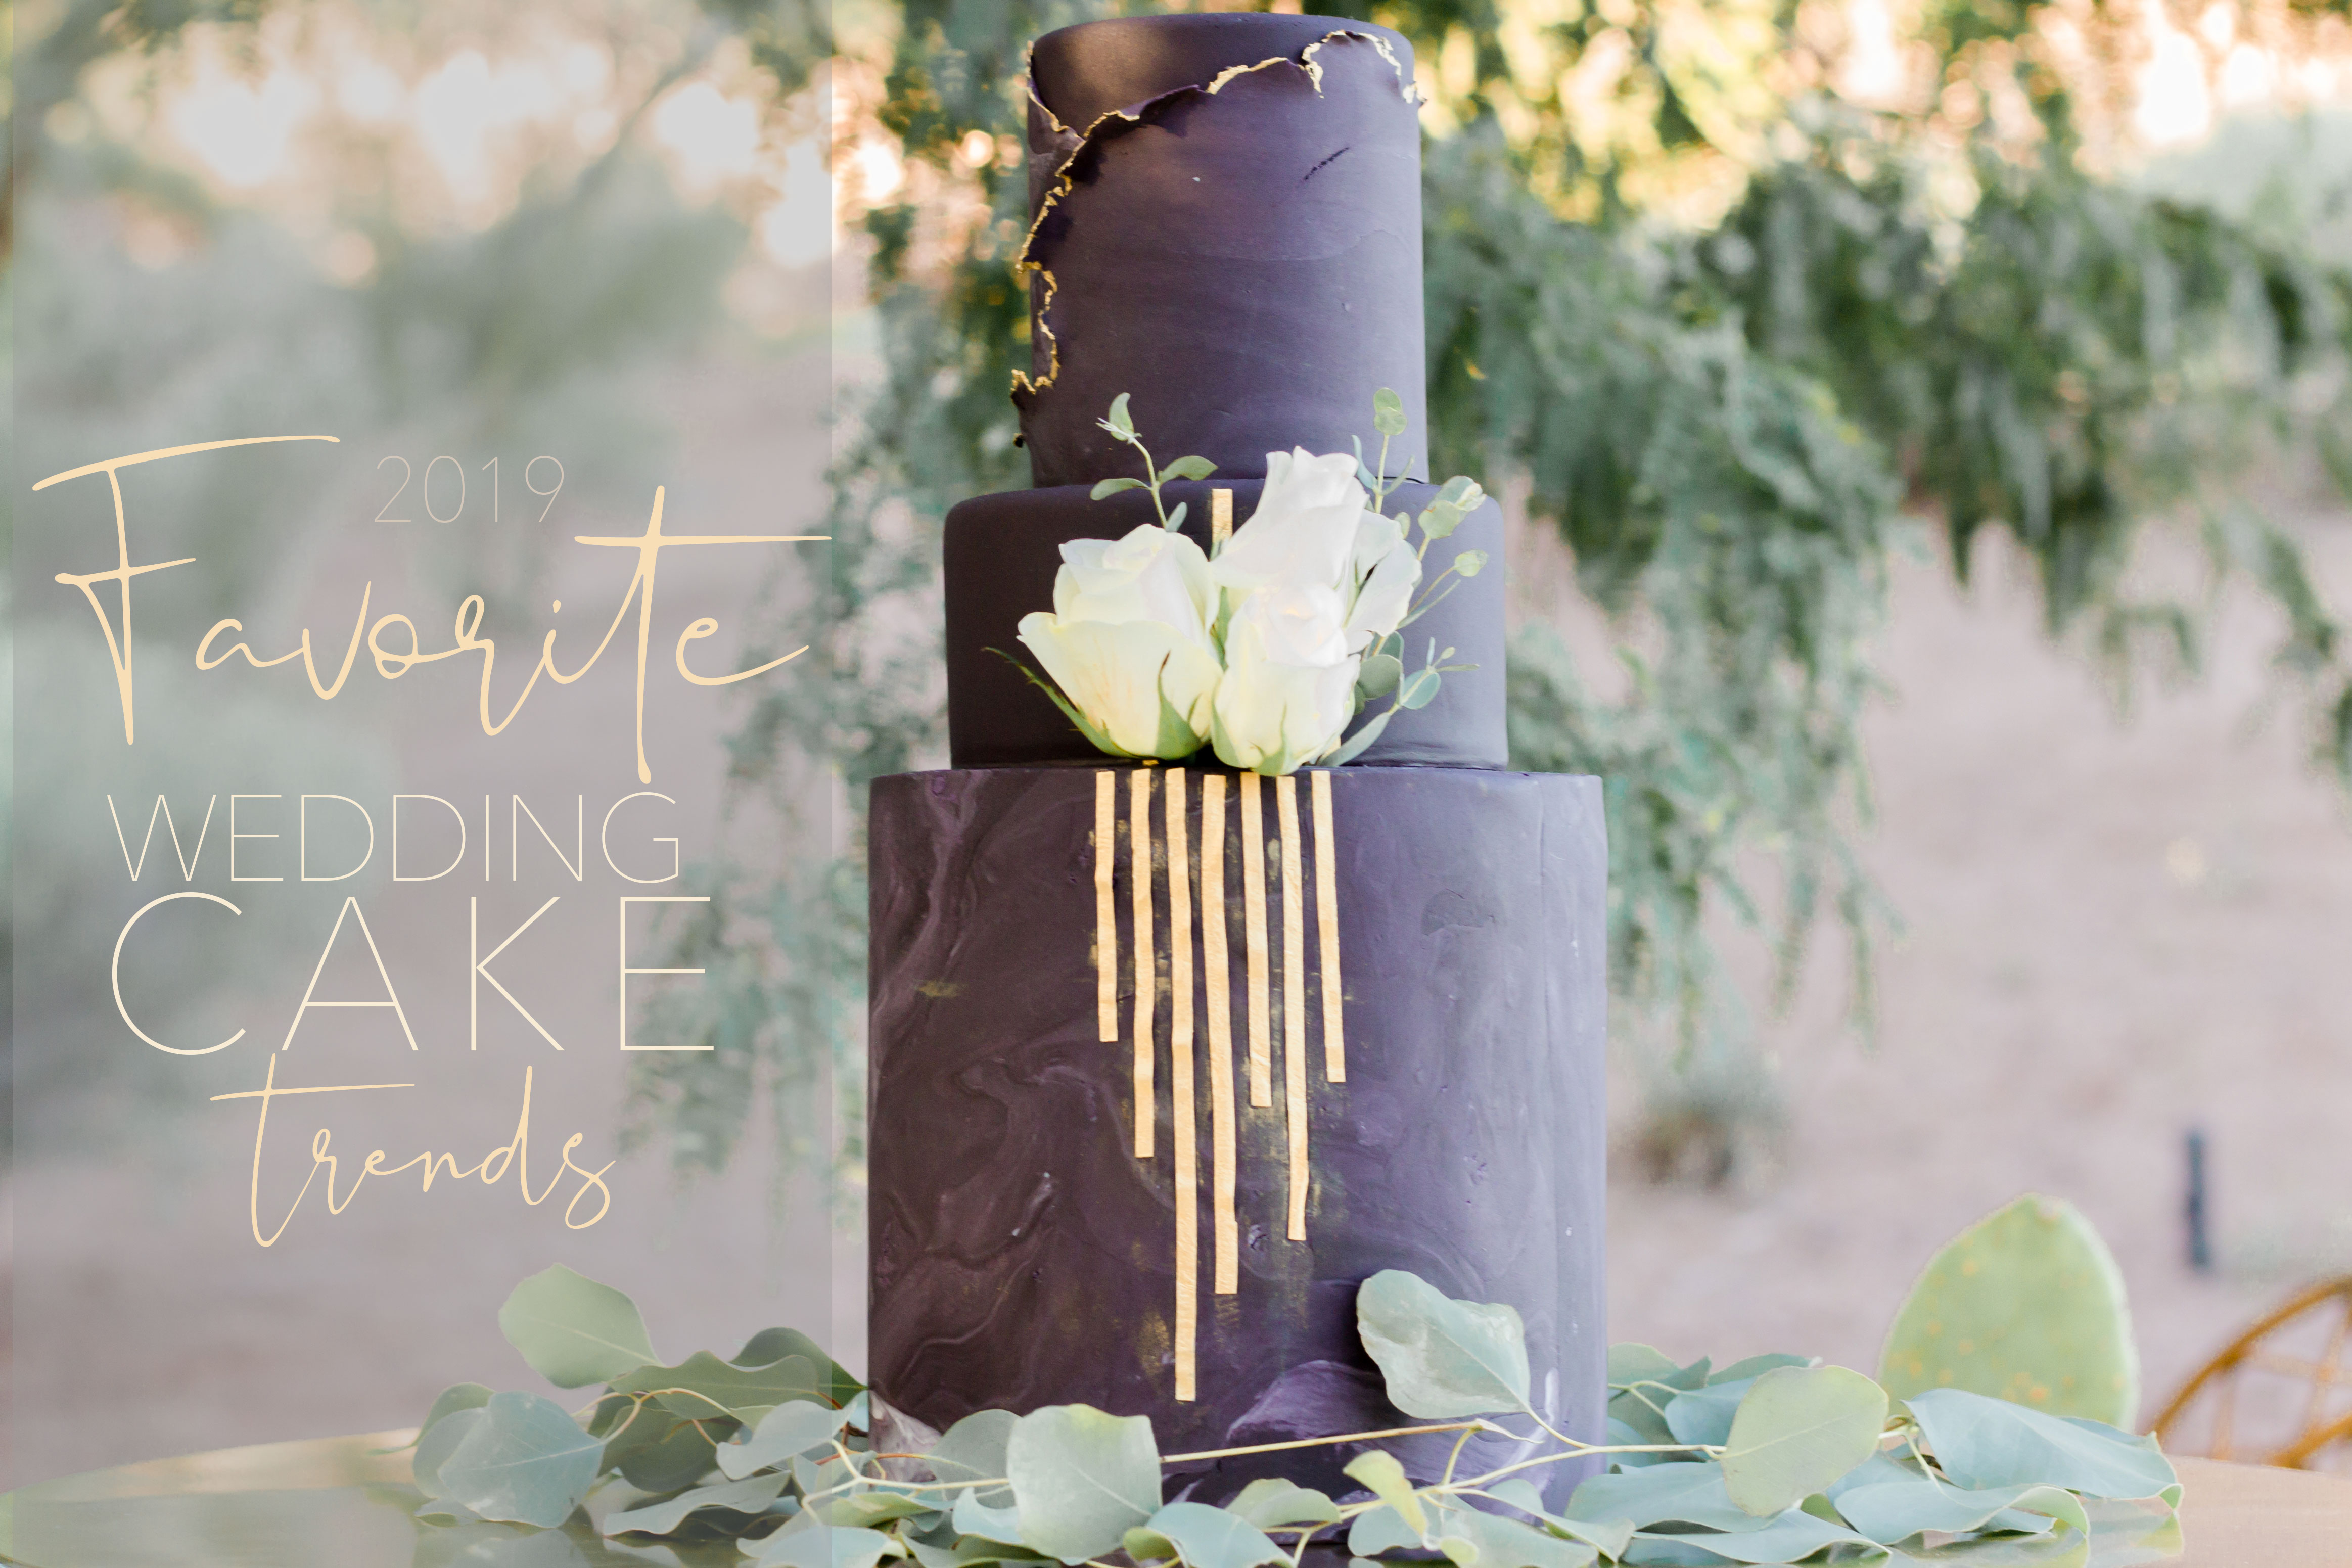 2019 wedding cake trends marble wedding cake ideas #weddingcake #whiteweddingcakes black wedding cakes